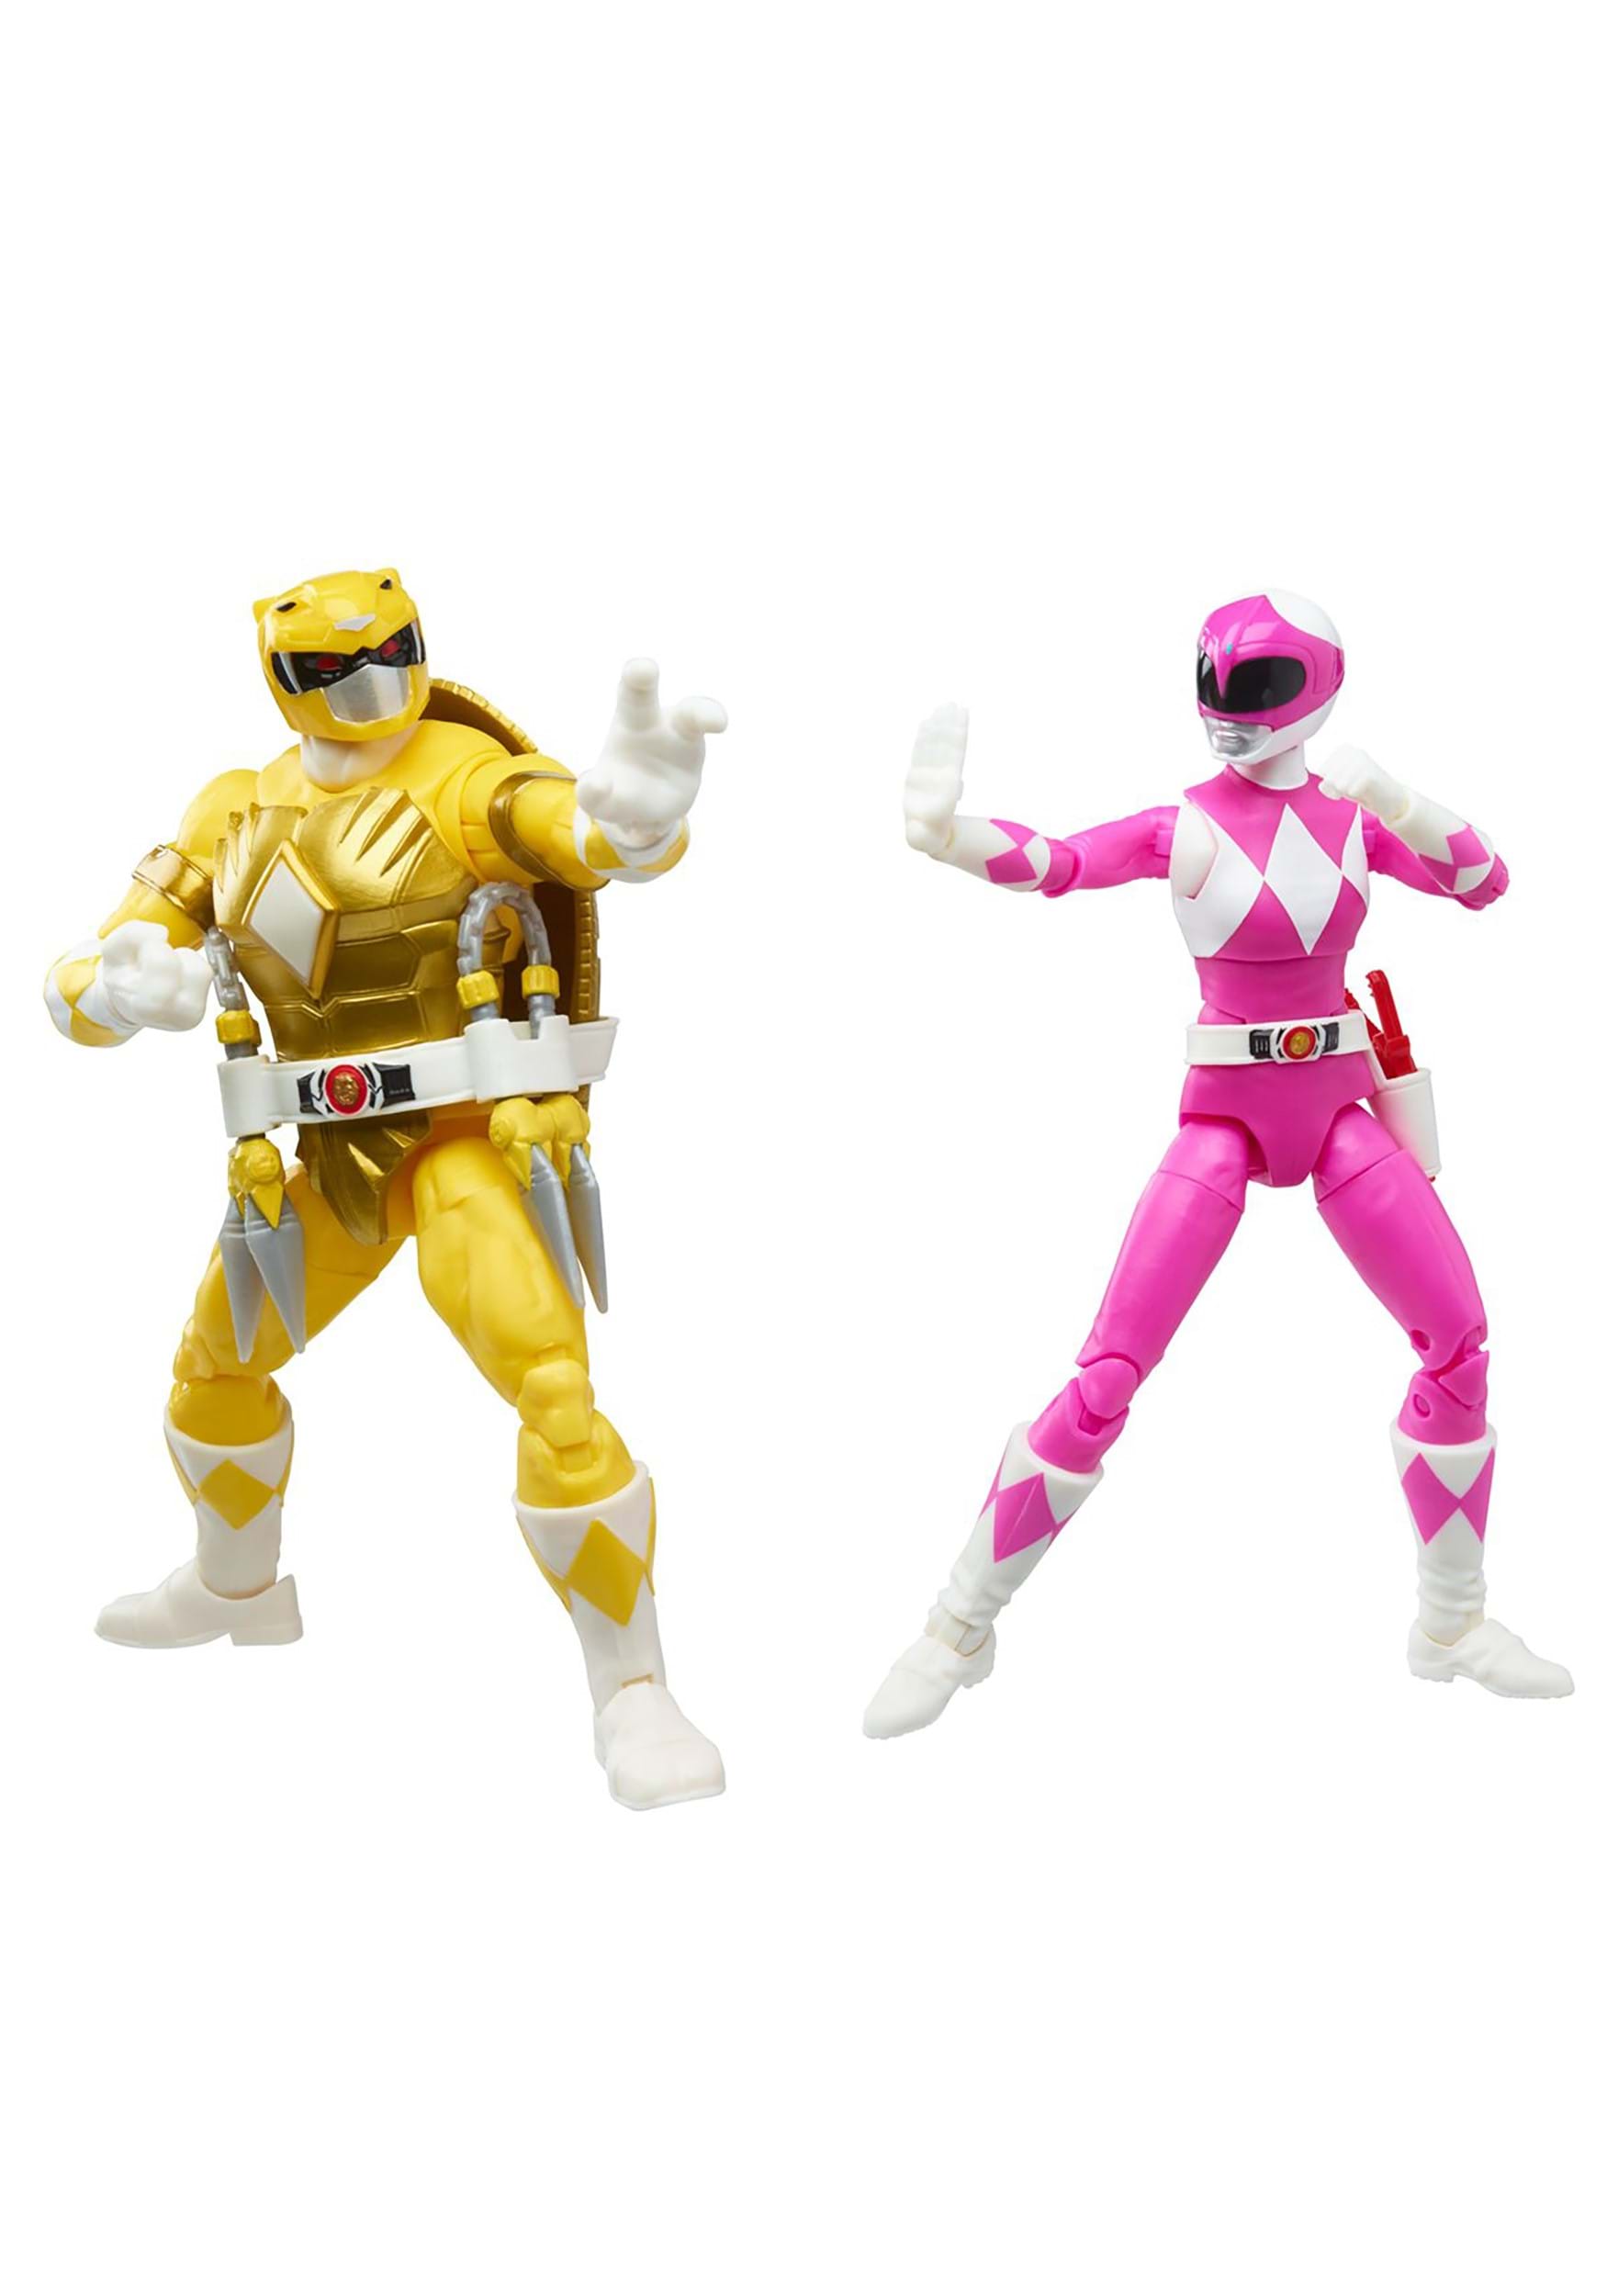 Power Rangers X Teenage Mutant Ninja Turtles Lightning Collection Michelangelo Yellow and April Pink Figures